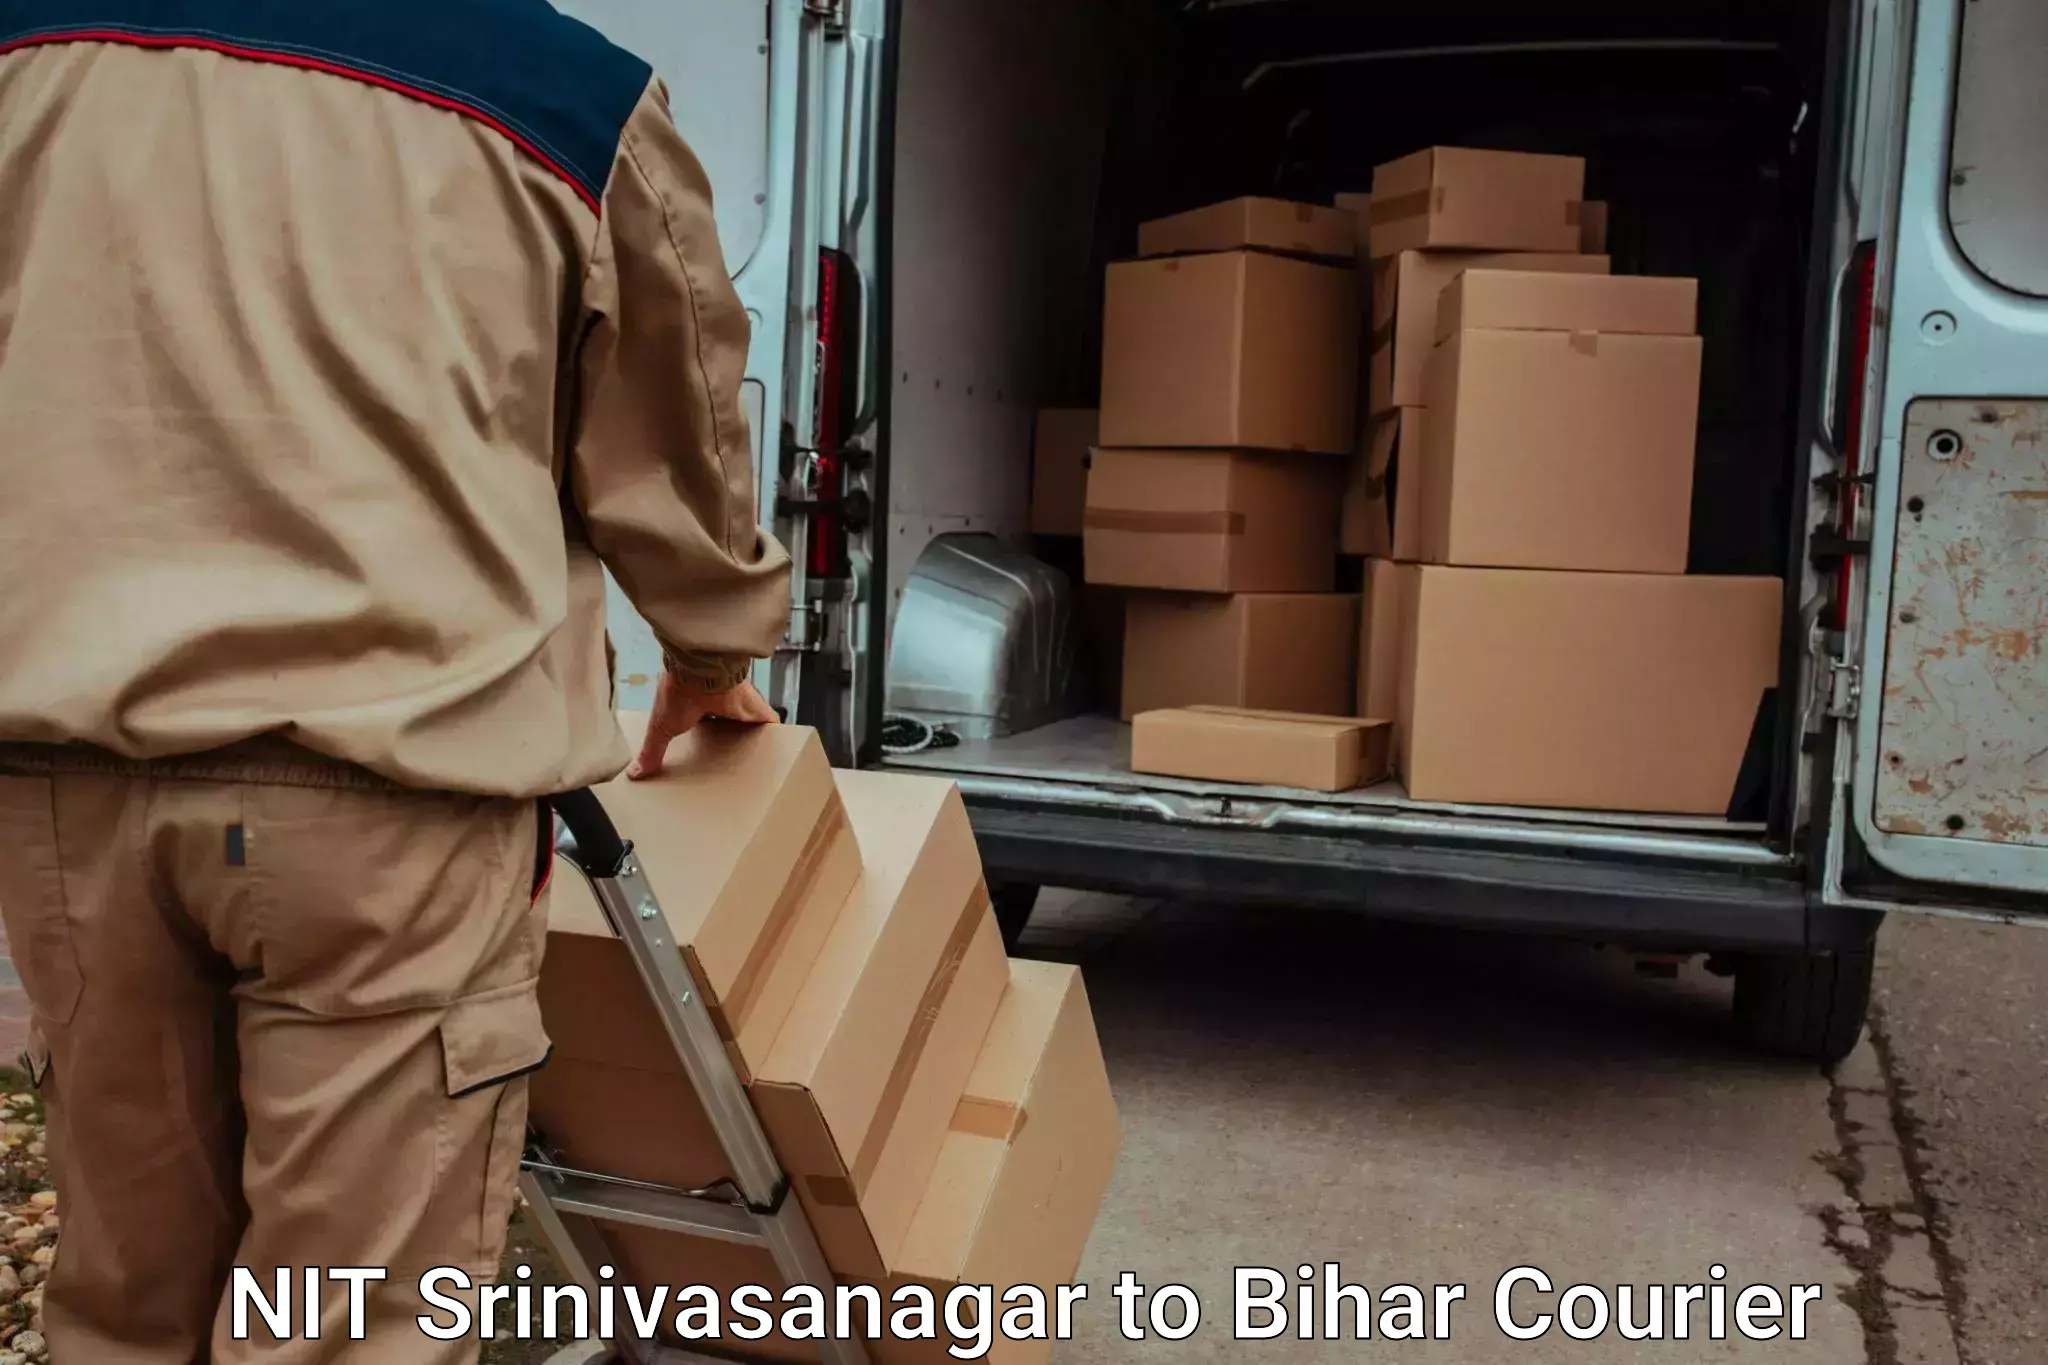 Hassle-free luggage shipping NIT Srinivasanagar to Muzaffarpur